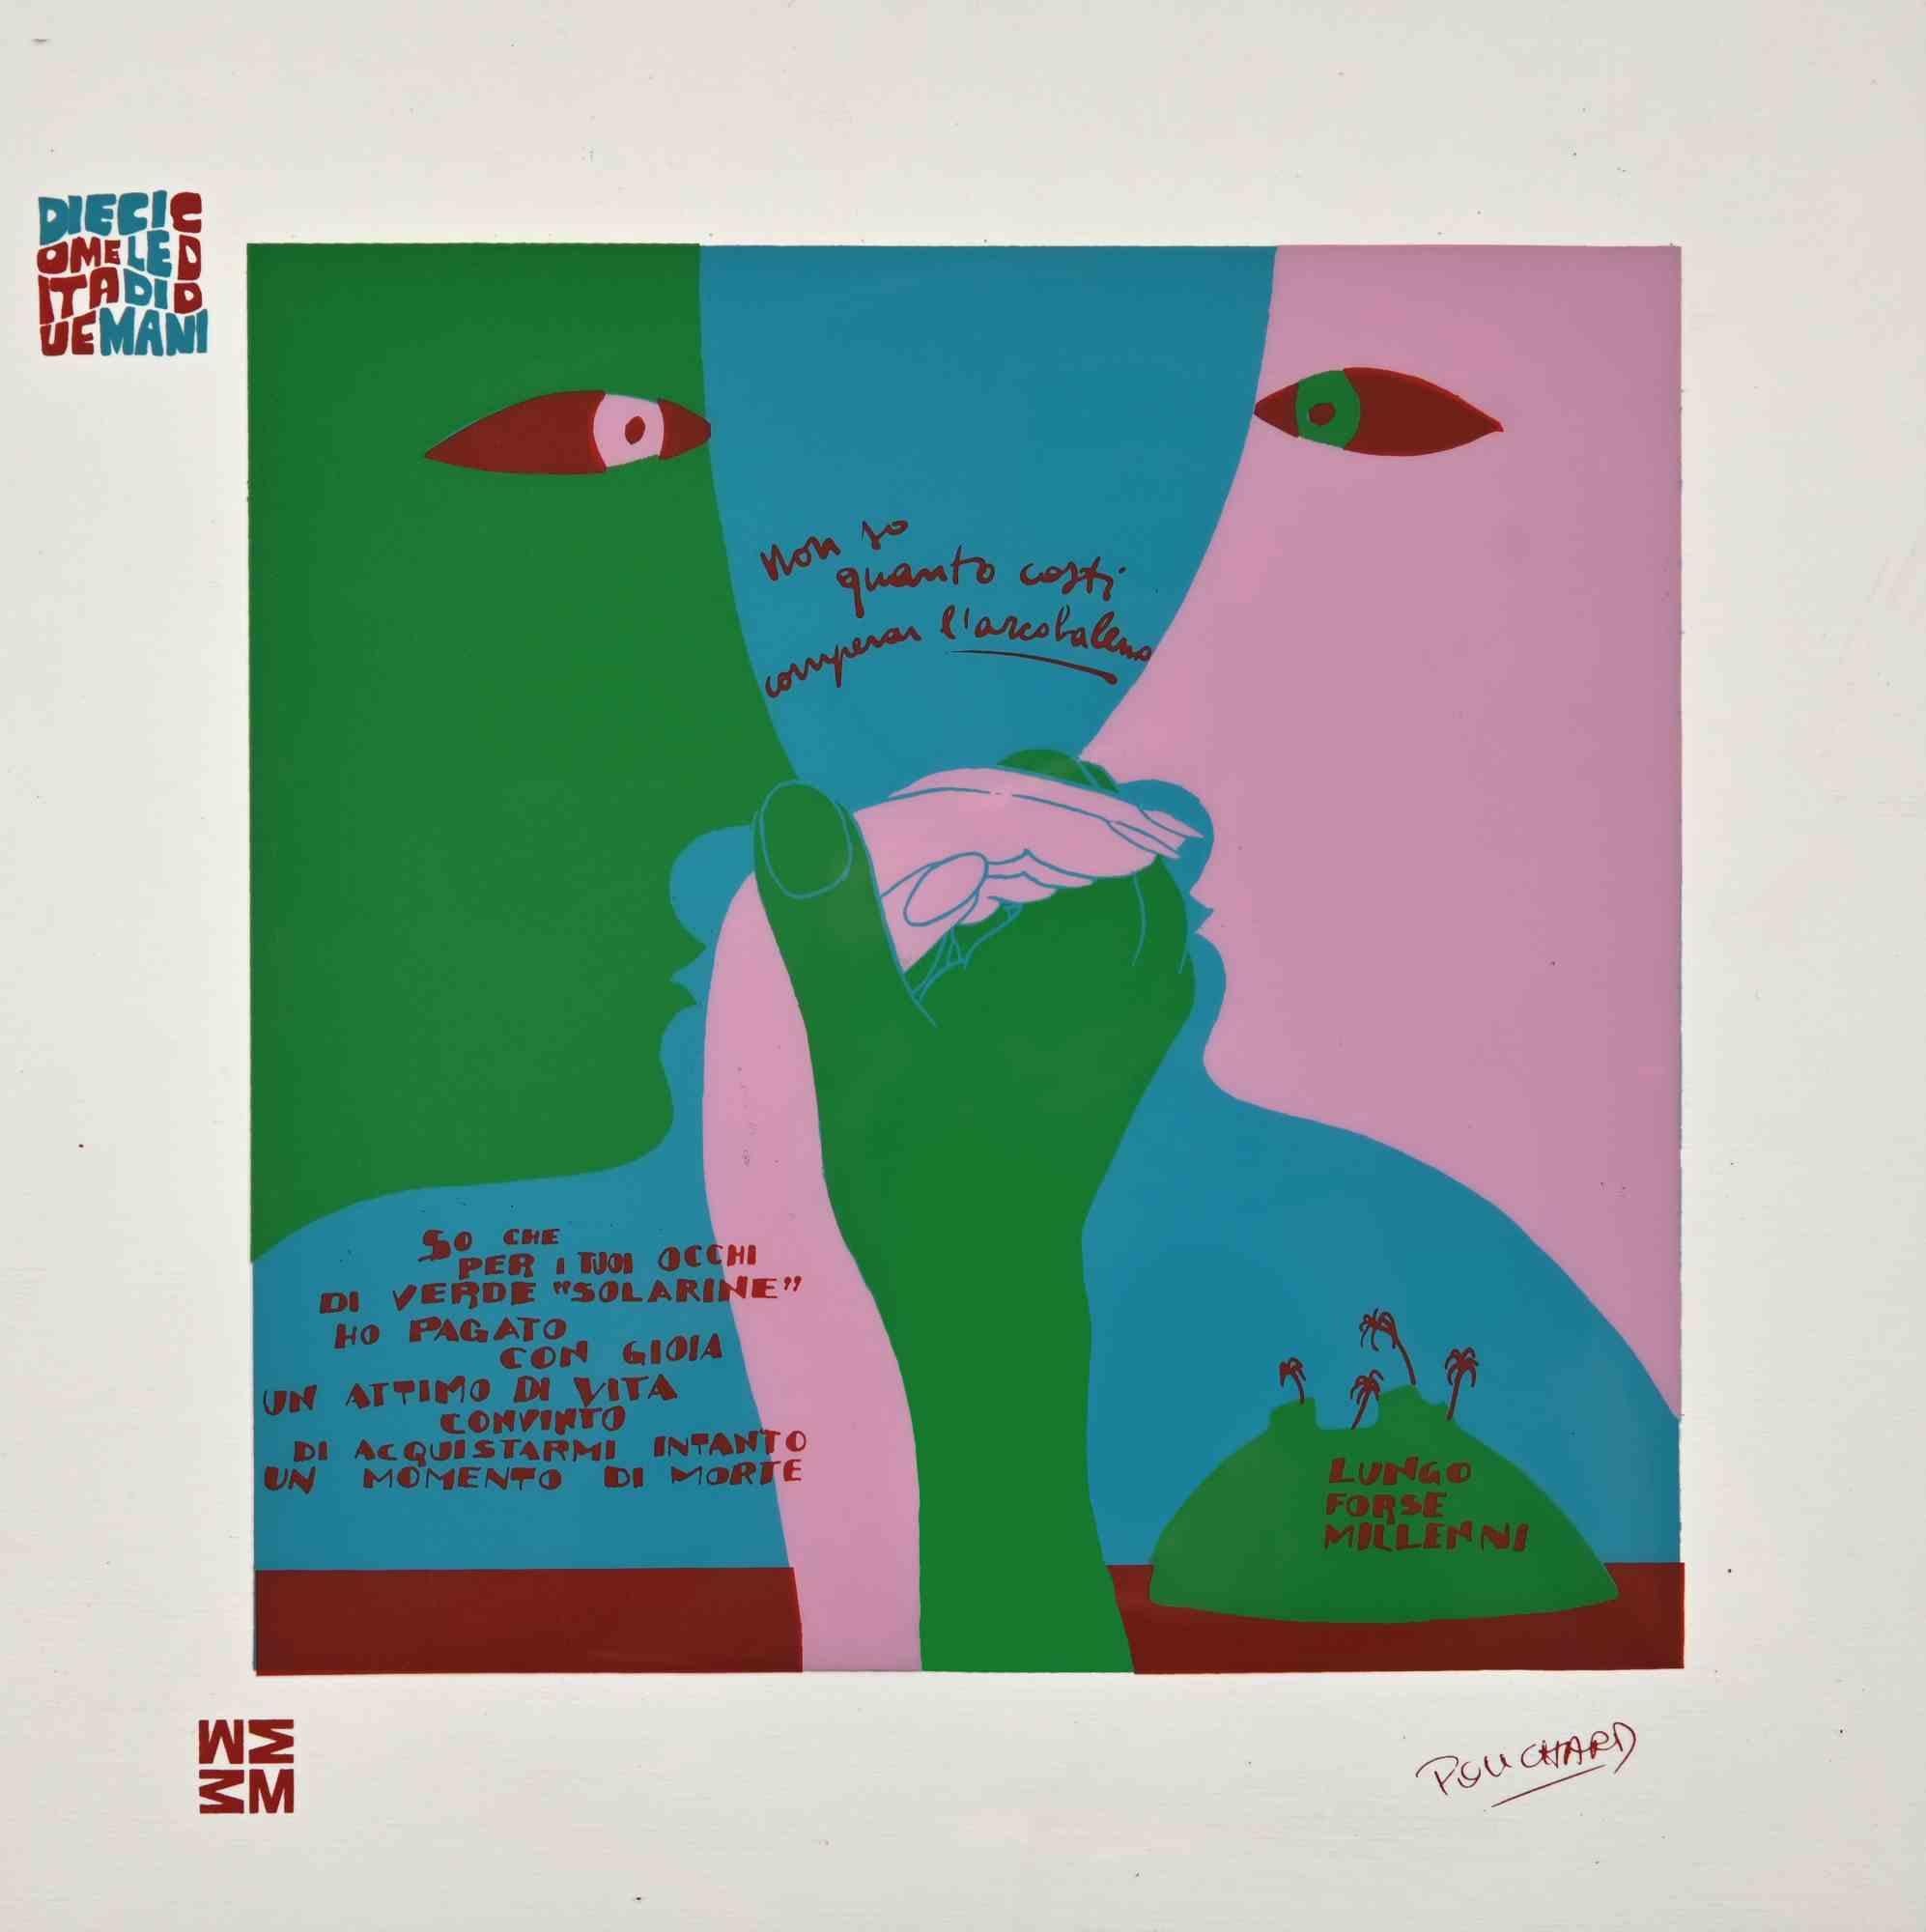 Diecicomeleditadiduemani - Screen Print on Acetate by Ennio Pouchard - 1973 For Sale 3